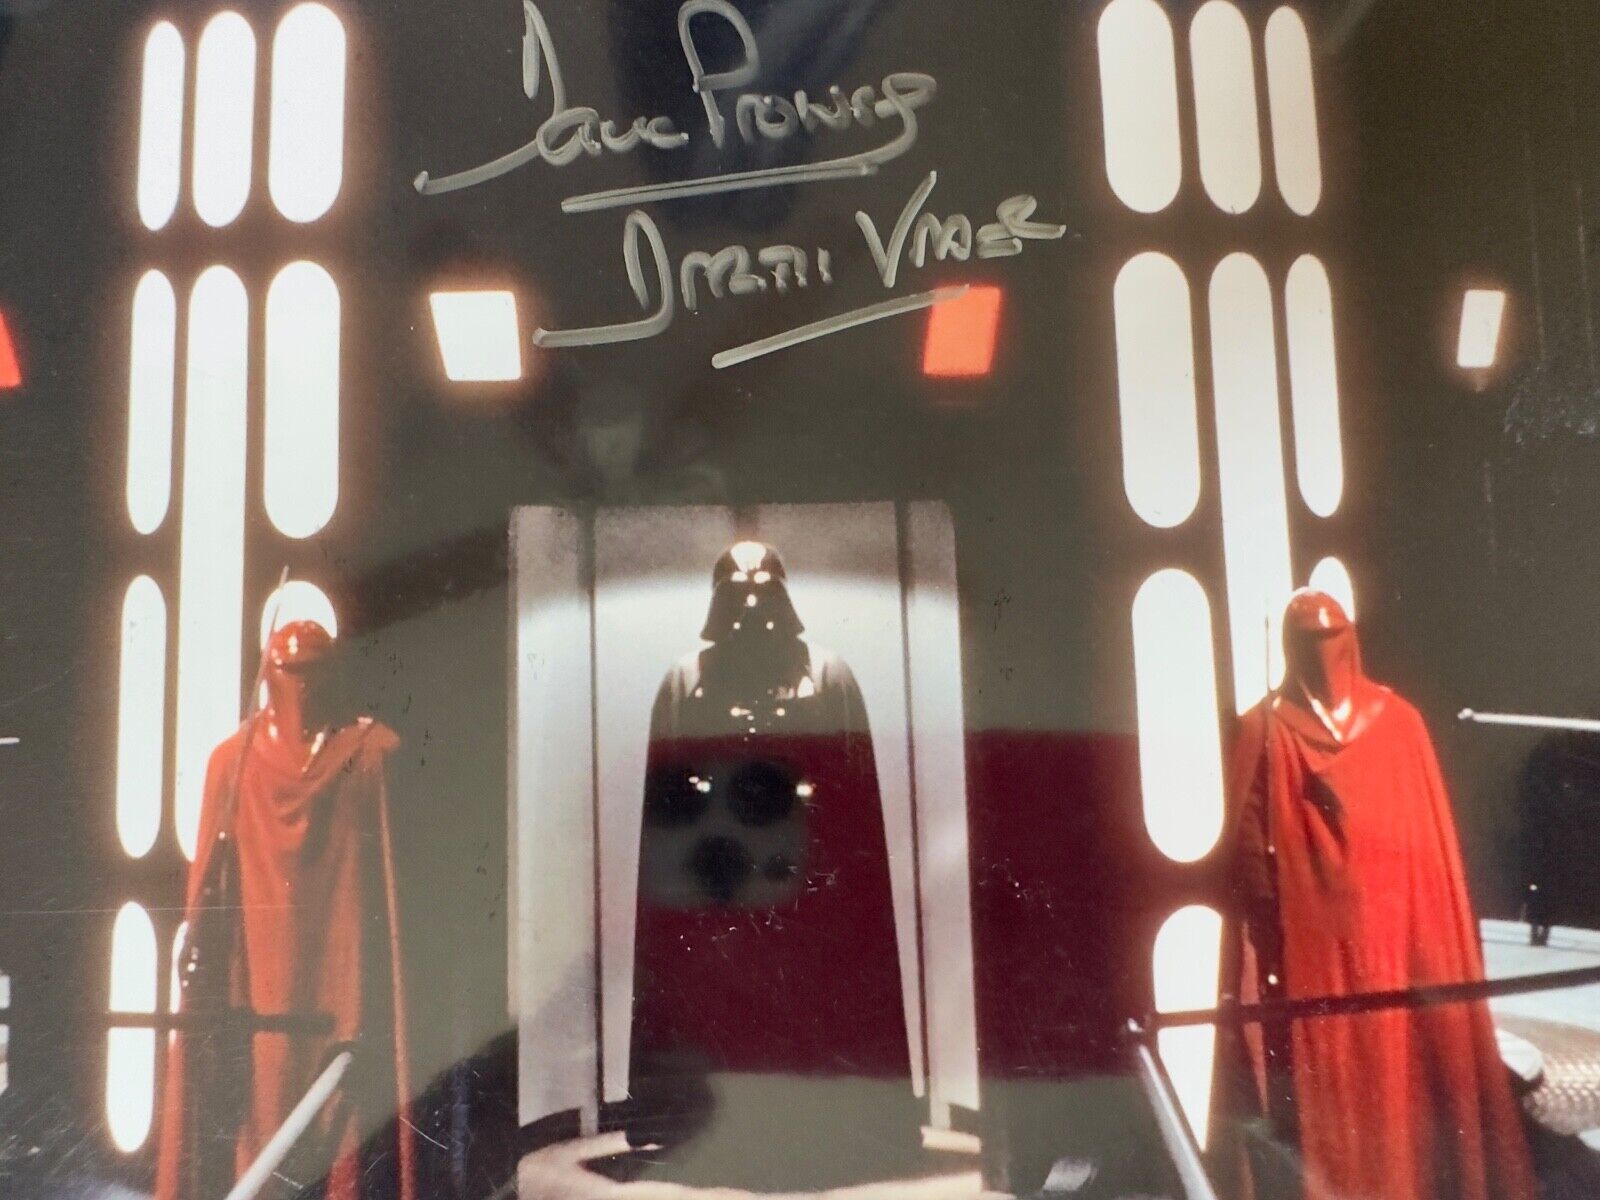 Dave Prowse Signed Star Wars Darth Vader